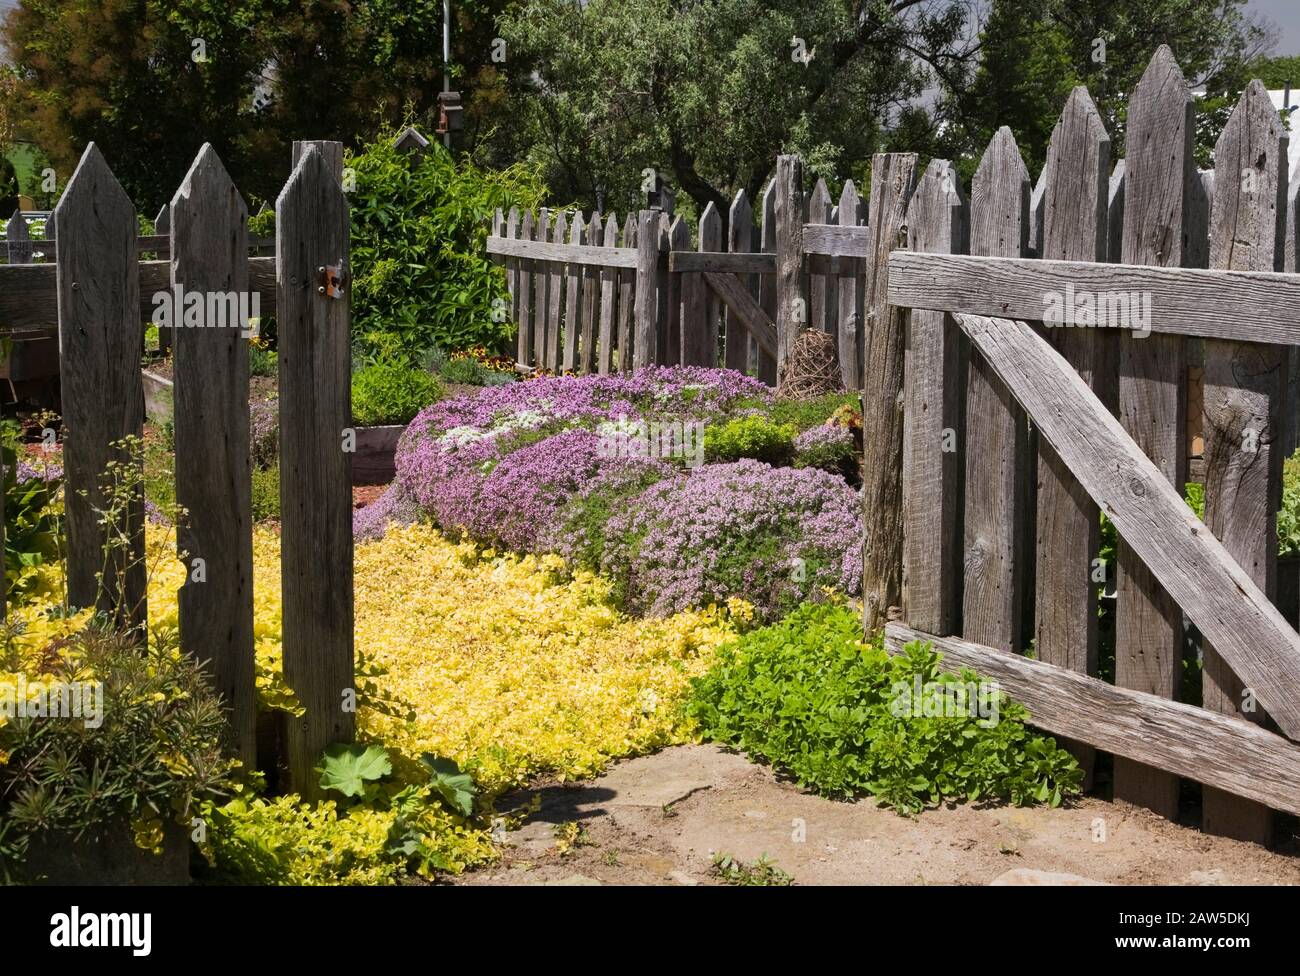 Old wooden rustic picket fence border with purple Thymus serpyllum and golden Lysimachia nummularia ‘Aurea’ - Creeping Jenny in backyard rustic garden Stock Photo